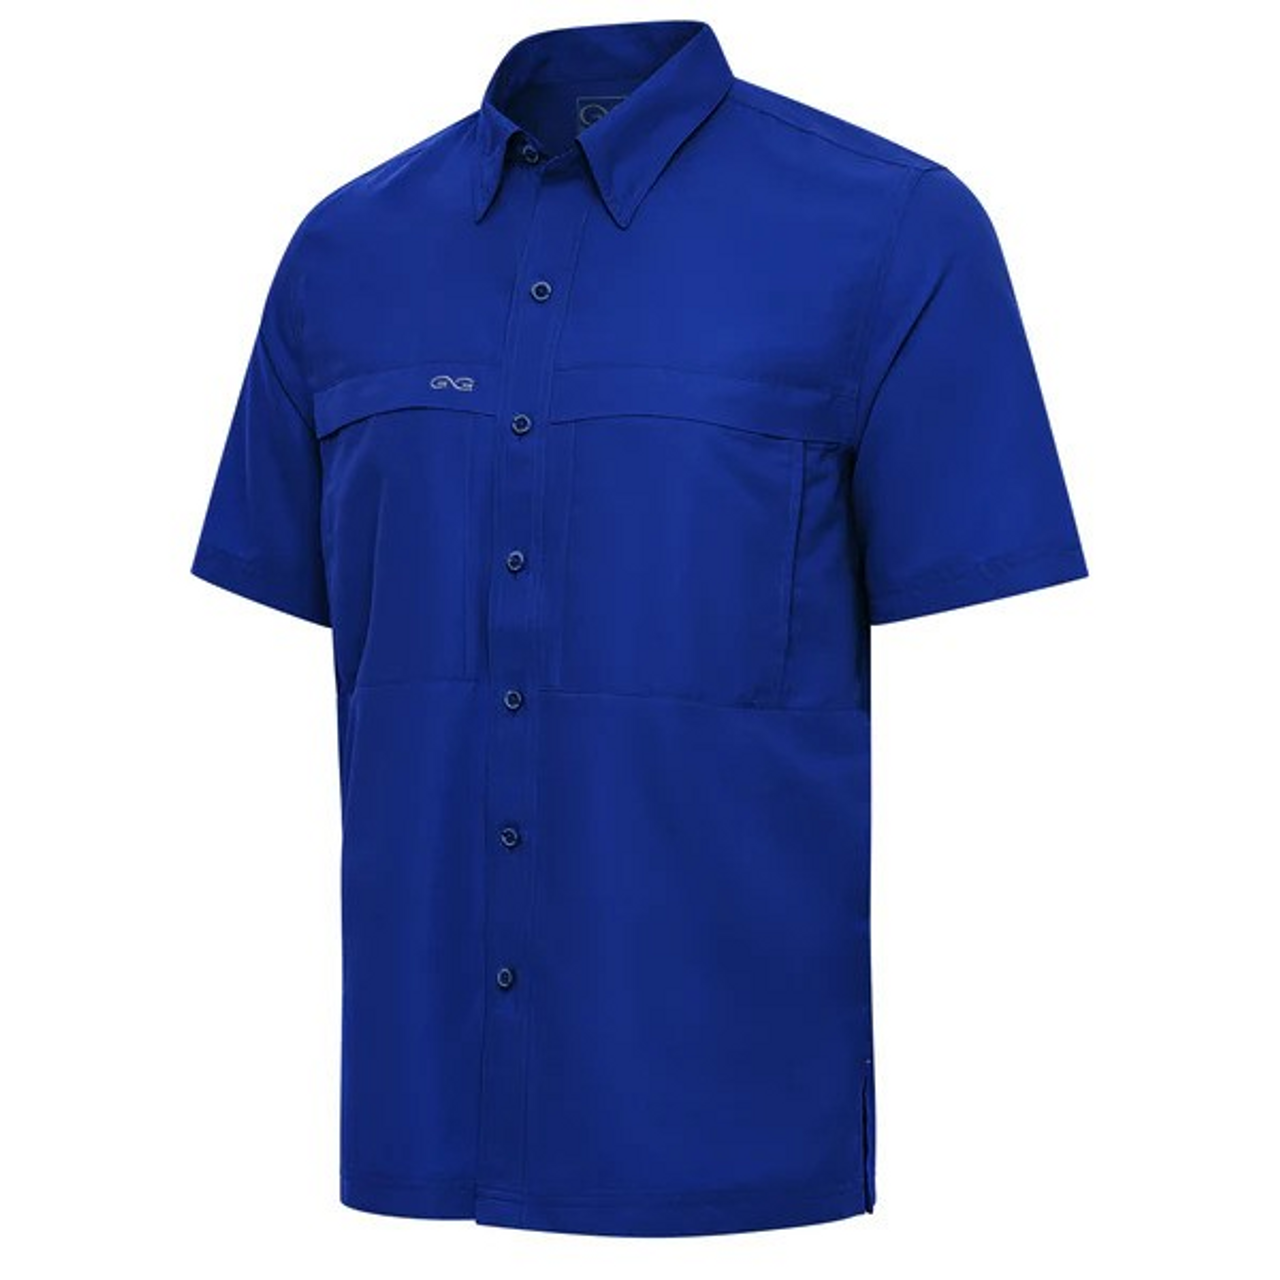 Magellan shirt men 3XL Relaxed Fit Stain Resistant Blue Button